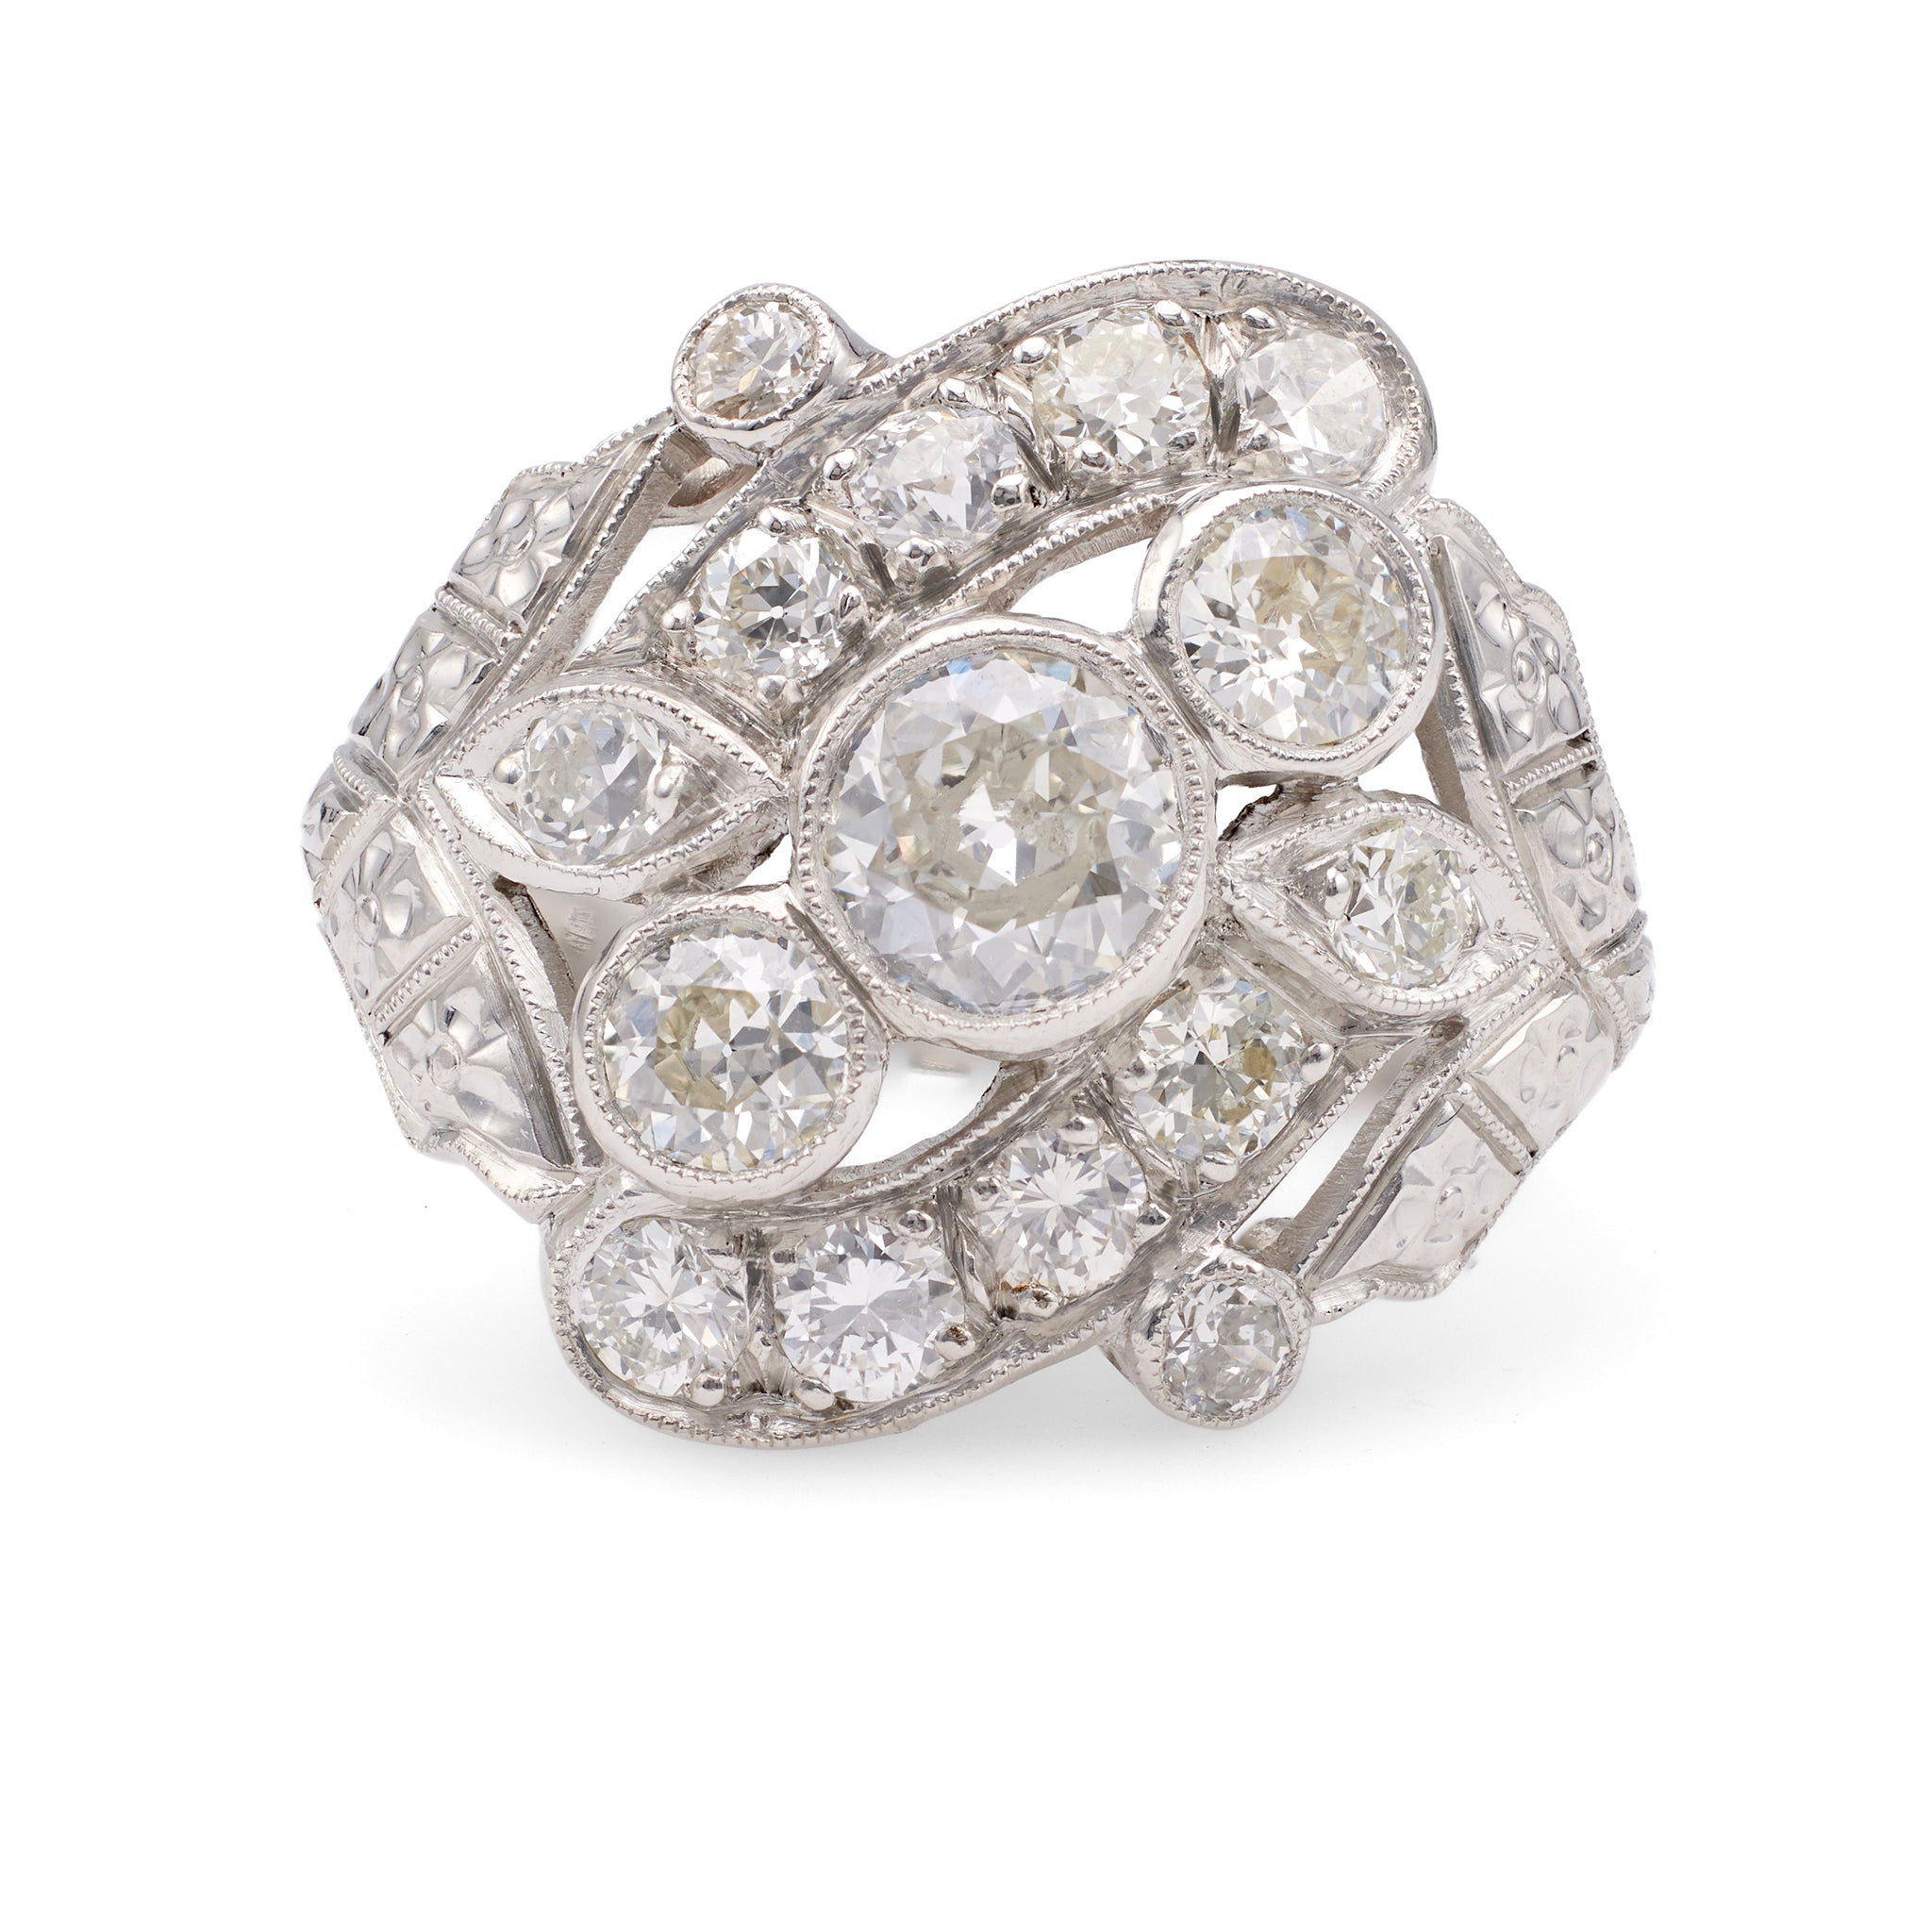 Art Deco 1.75 Carat Total Weight Diamond Platinum Ring